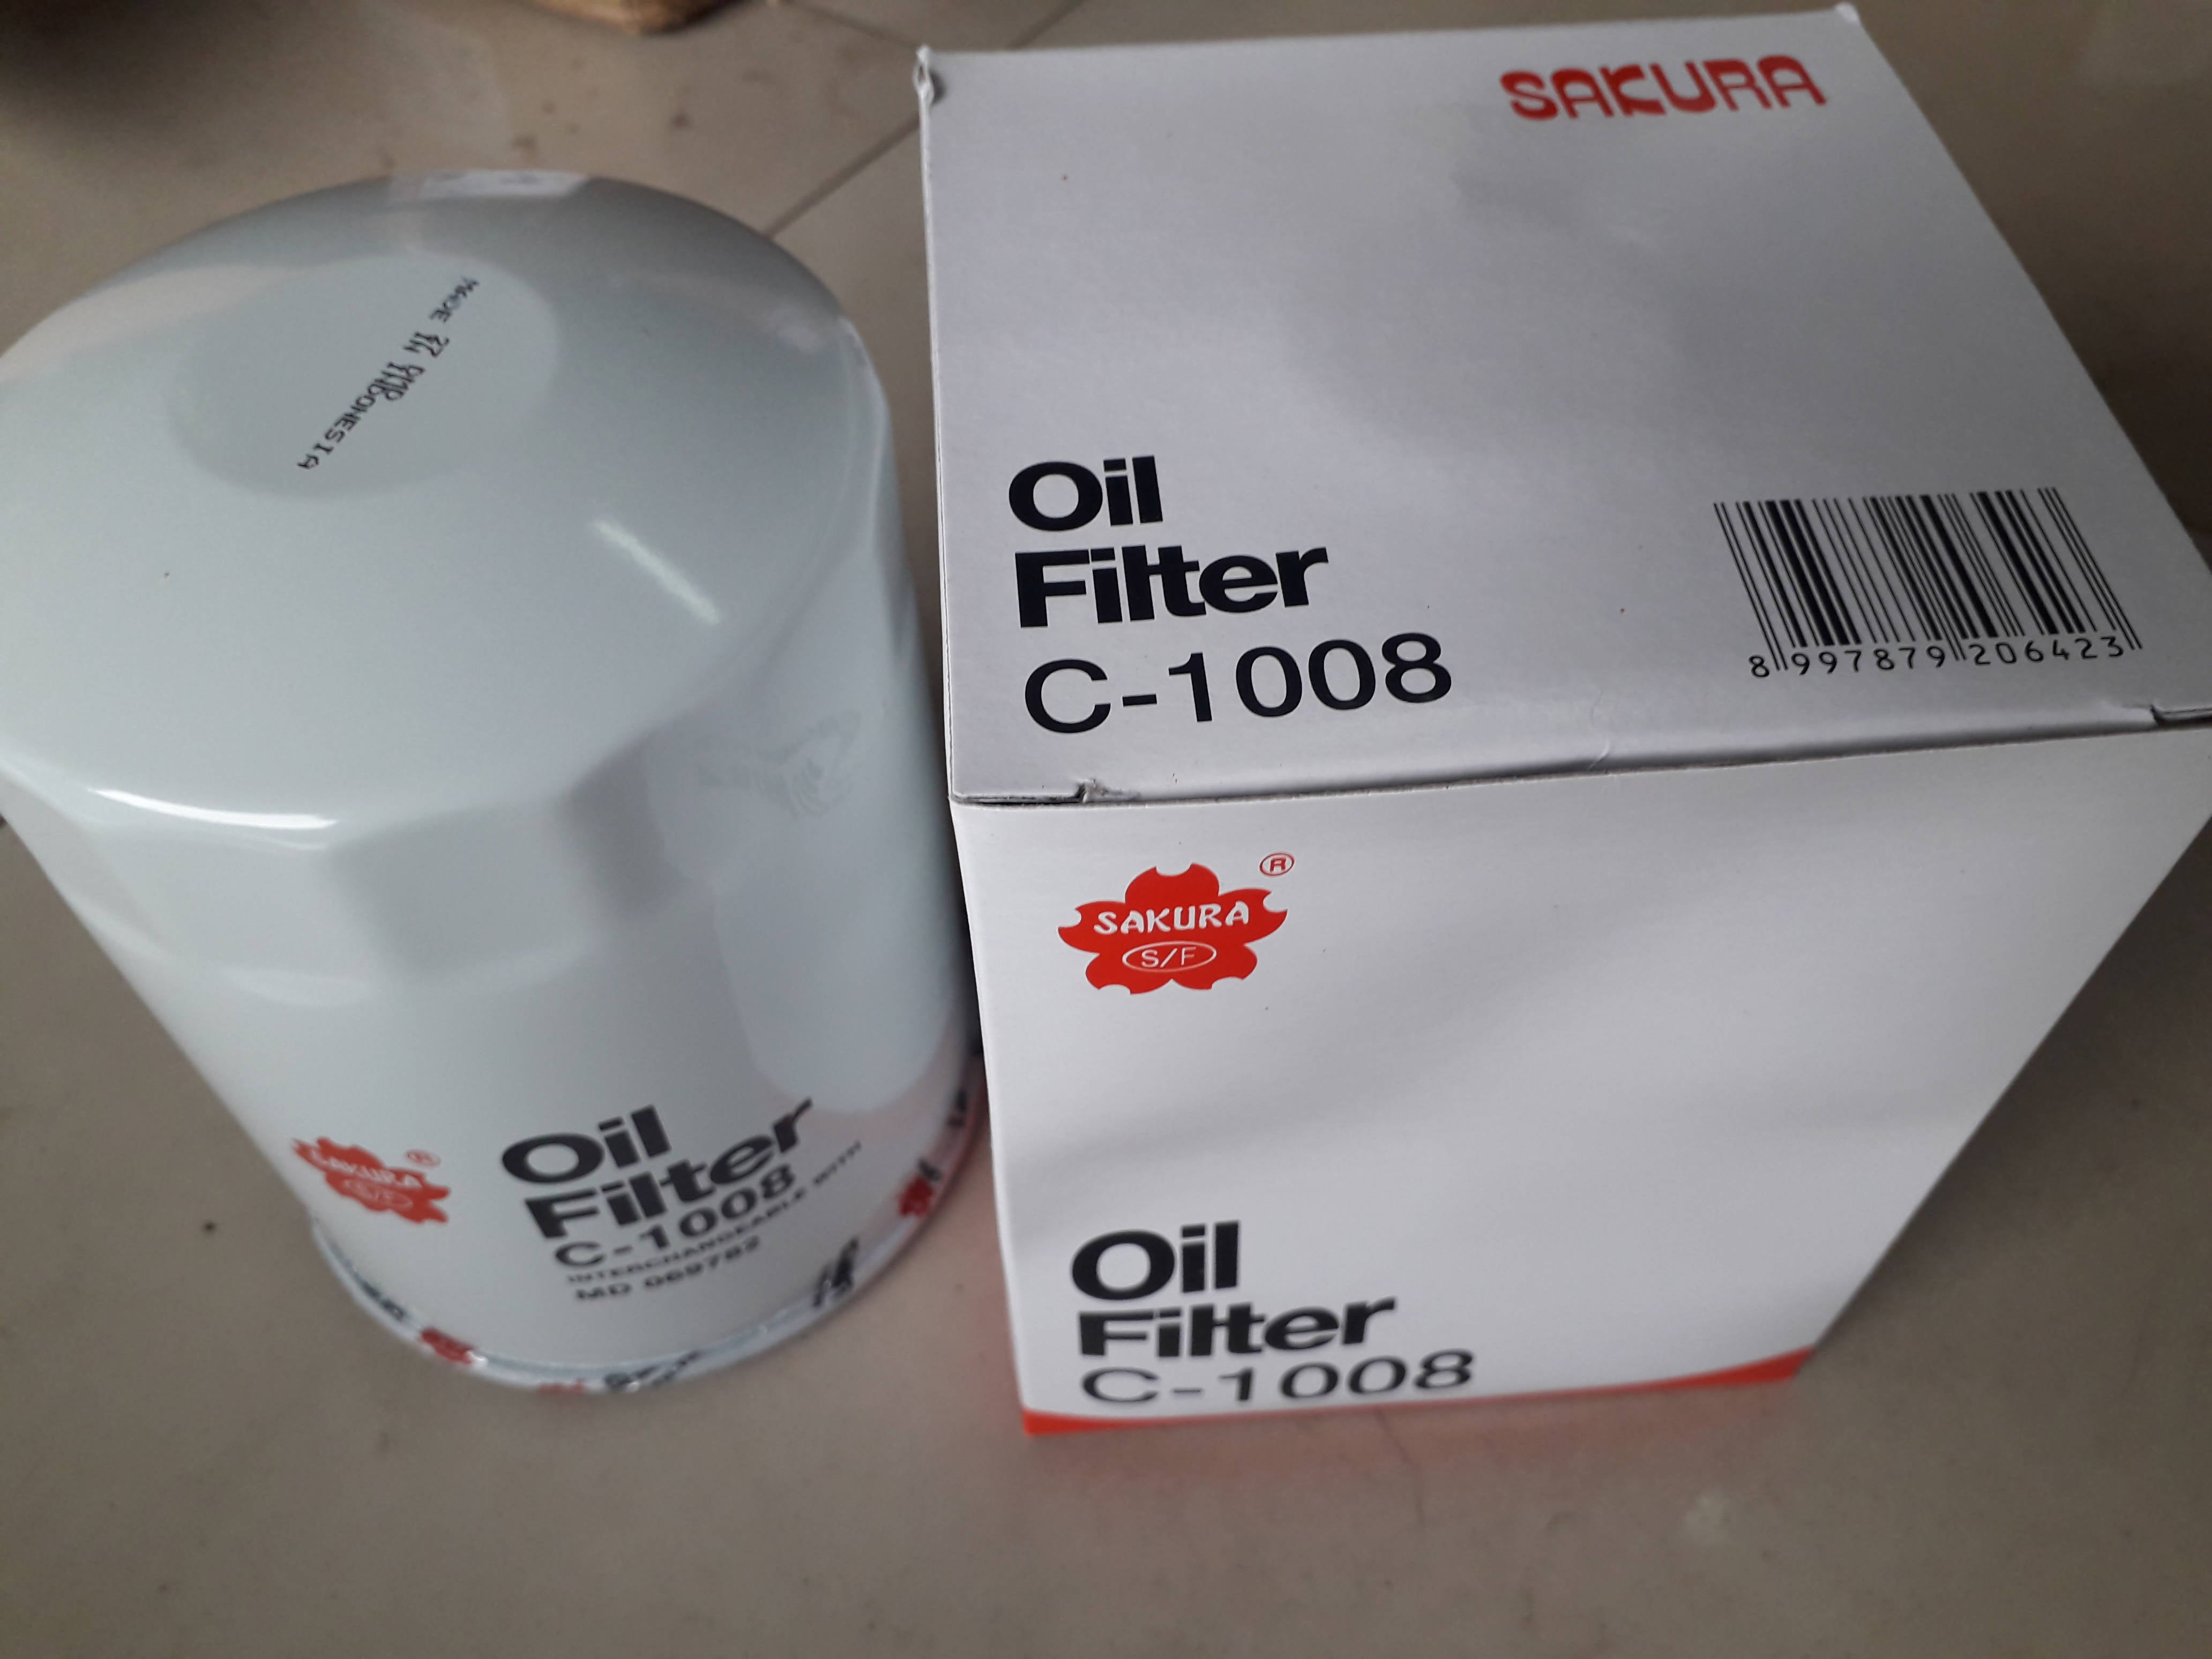 Oil filter, SAKURA, Mitsubishi Pajero, C1008, (029257)